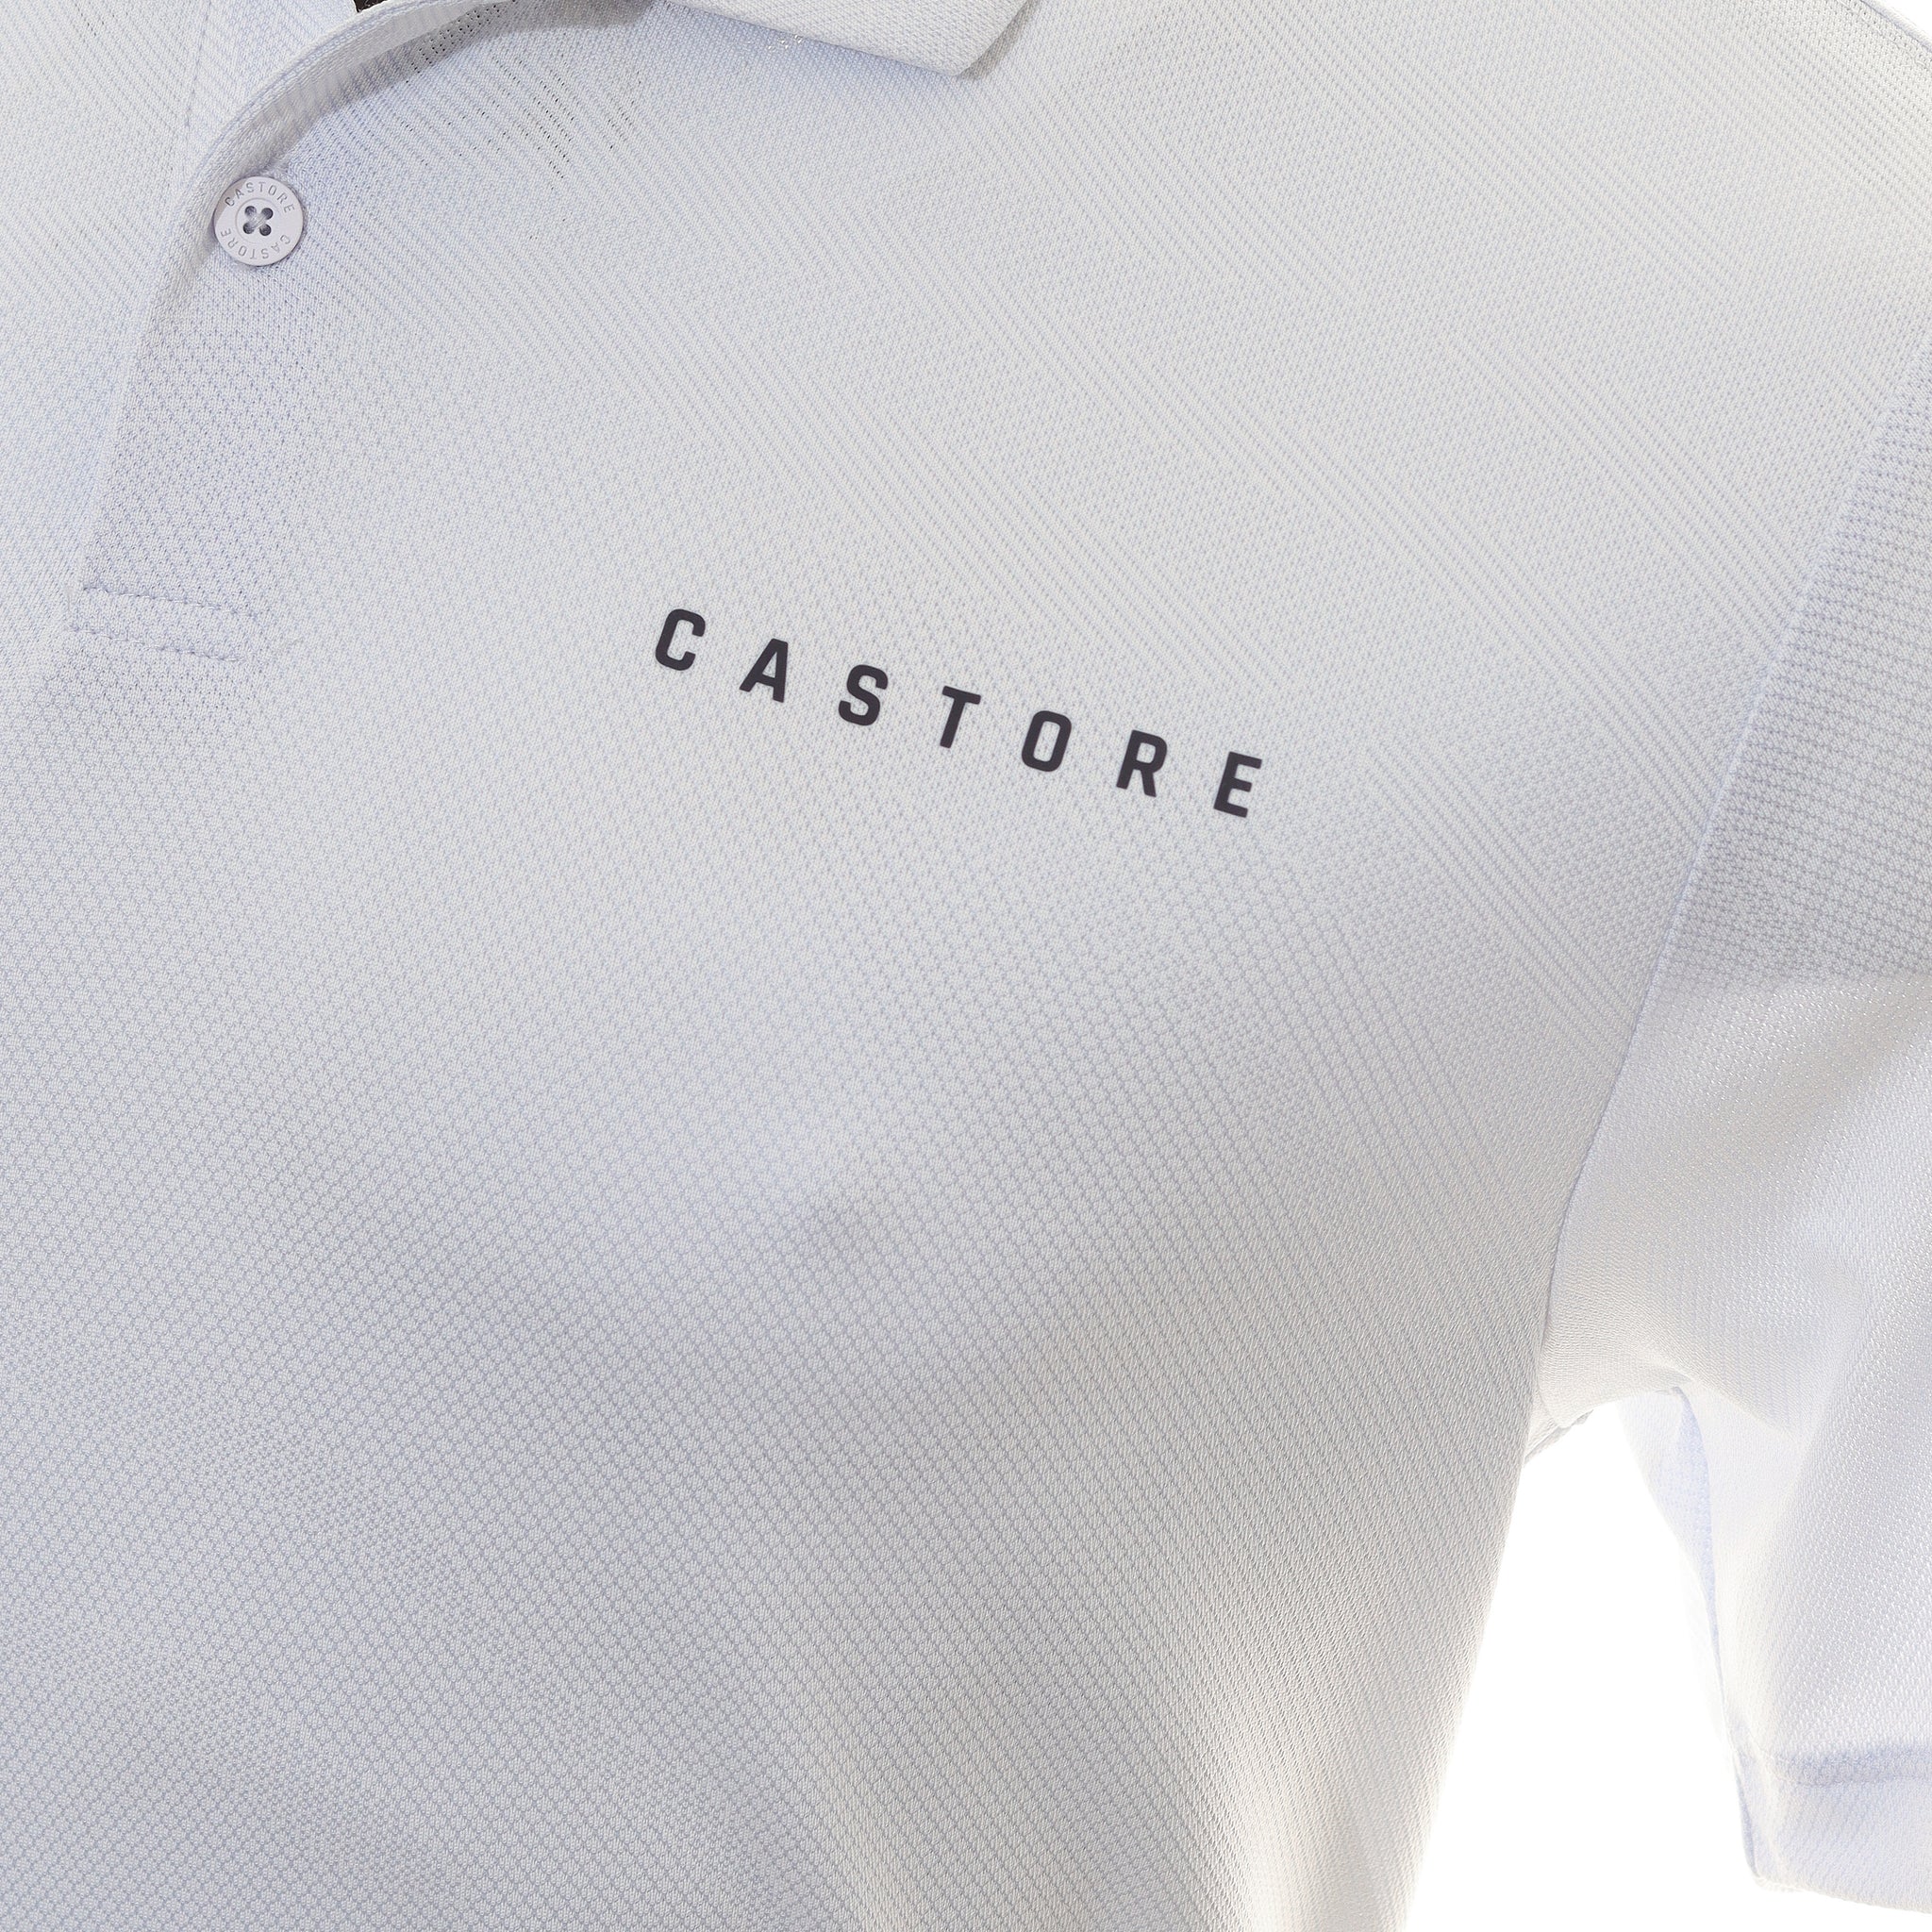 castore-engineered-knit-golf-polo-shirt-cma30175-b-white-020-function18